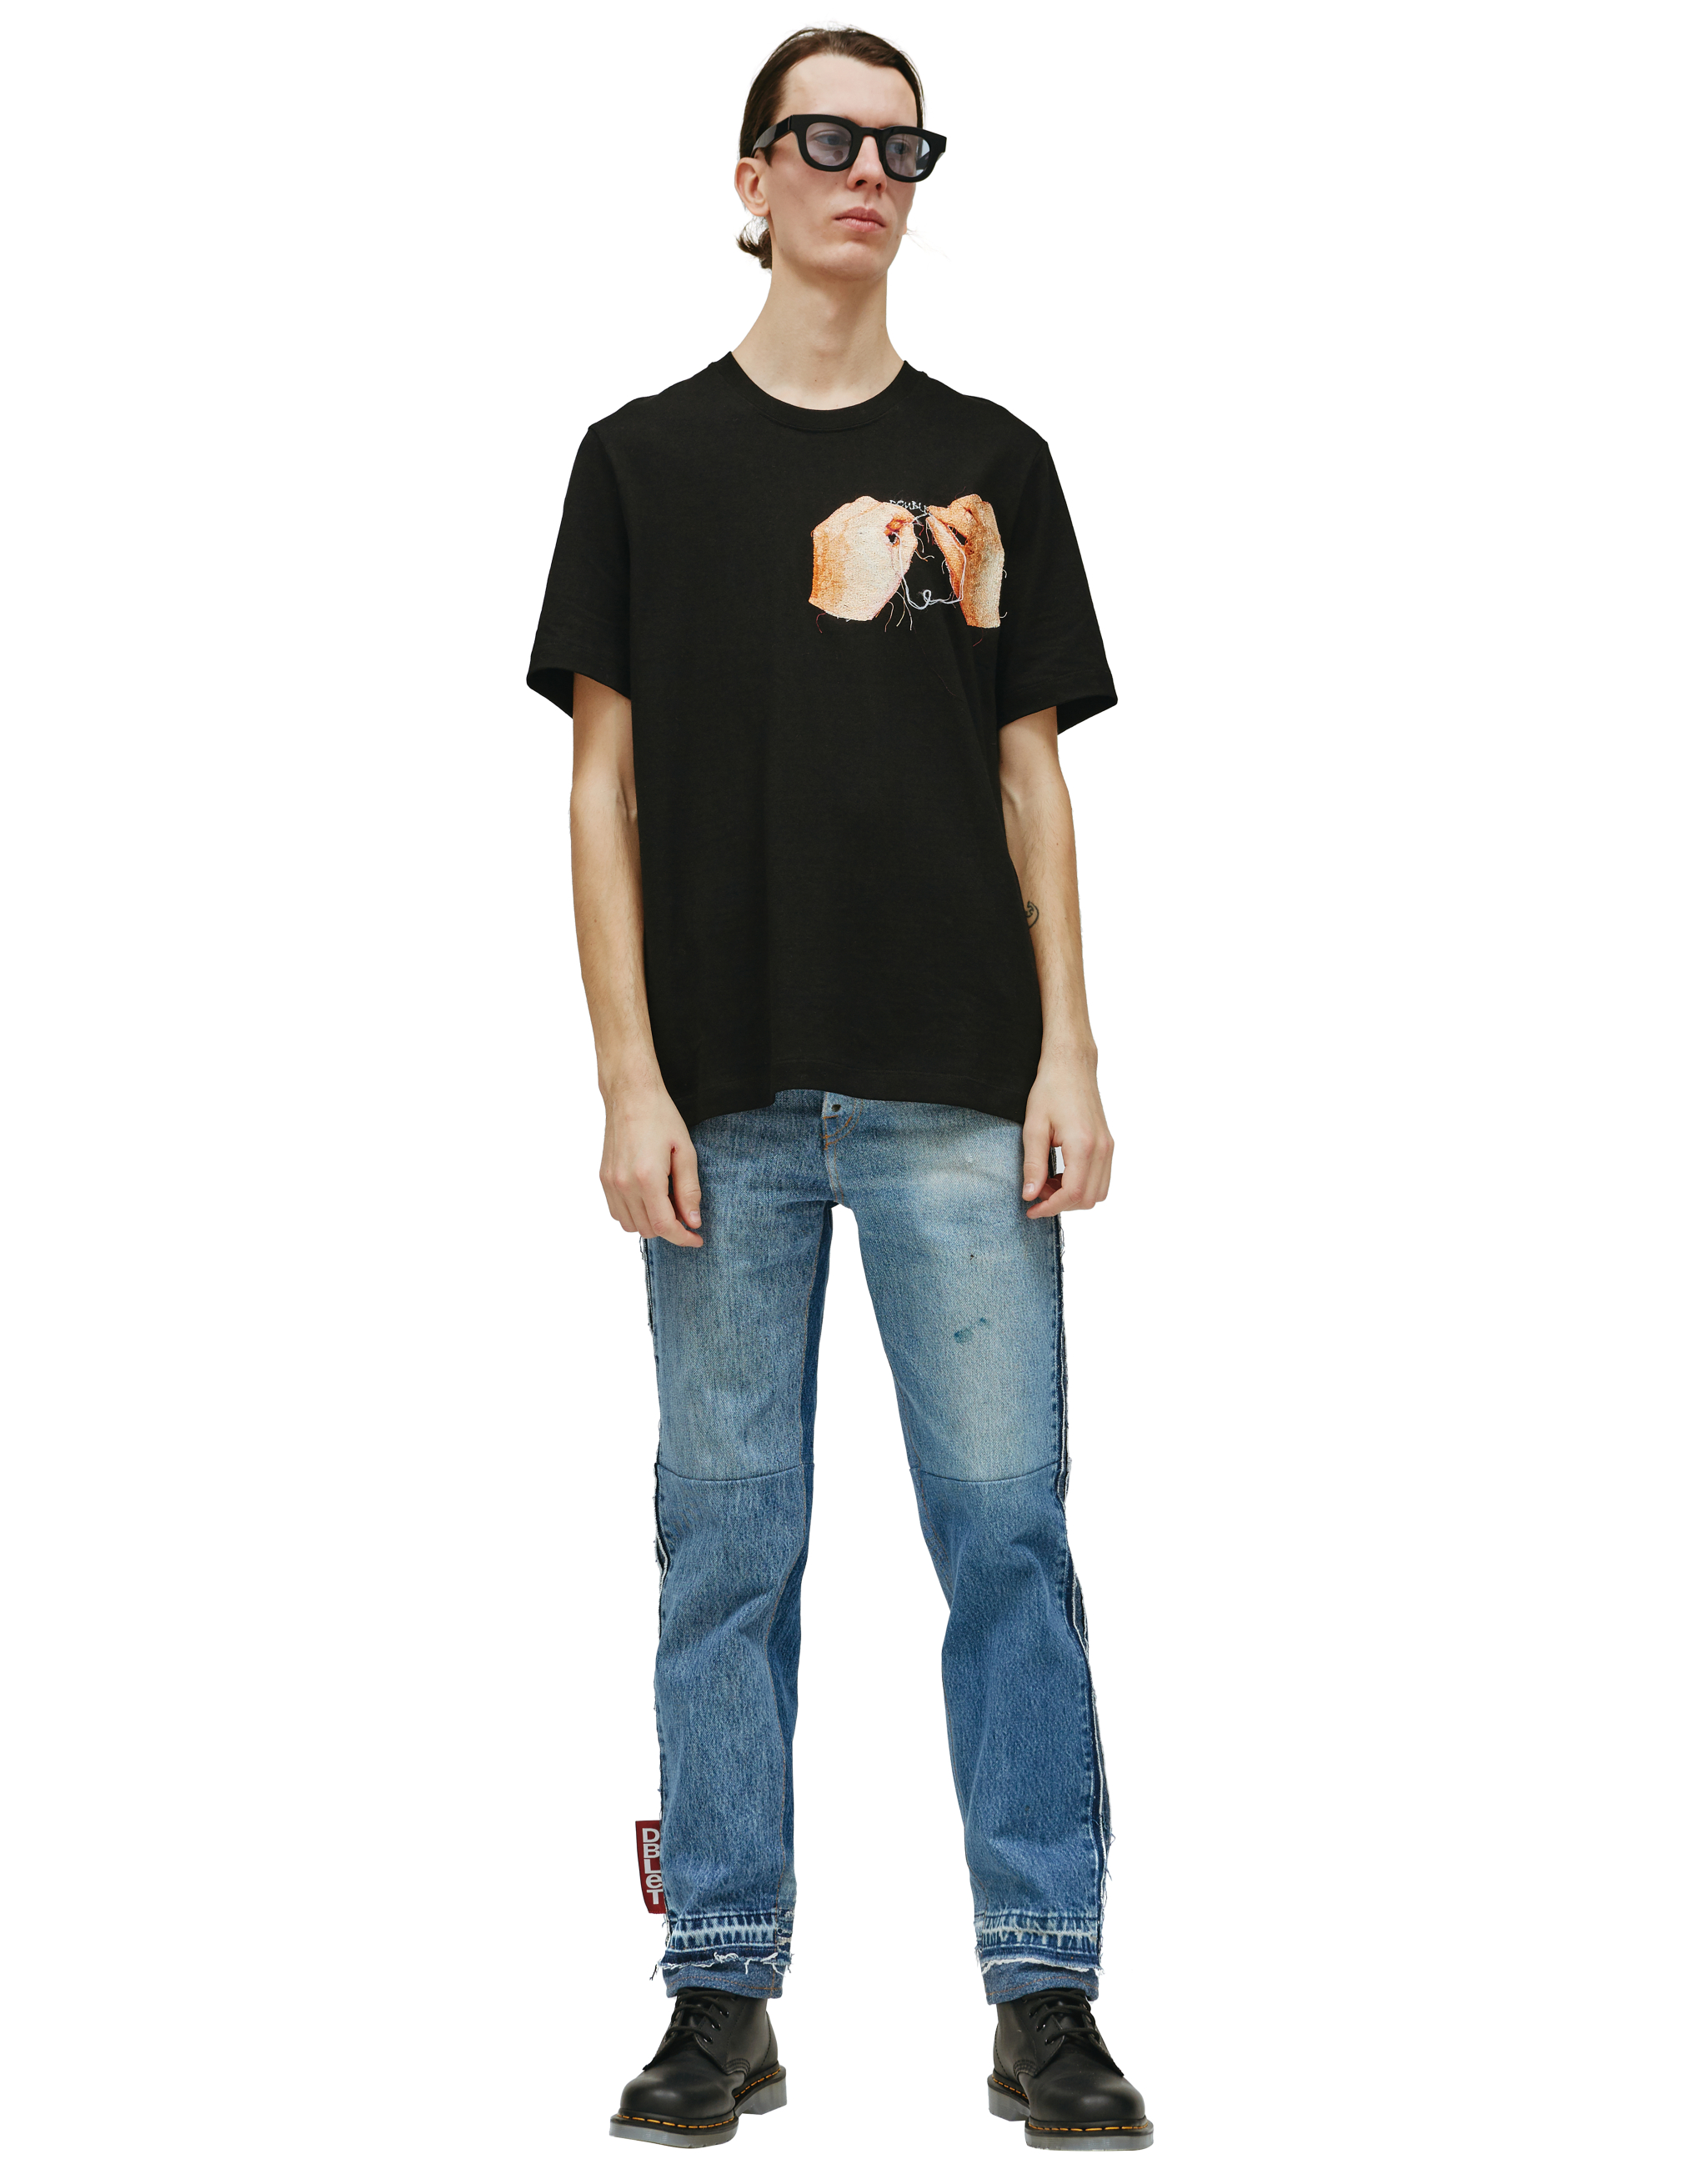 Хлопковая футболка с вышивкой Doublet 22AW33CS237/BLACK, размер M;L 22AW33CS237/BLACK - фото 1